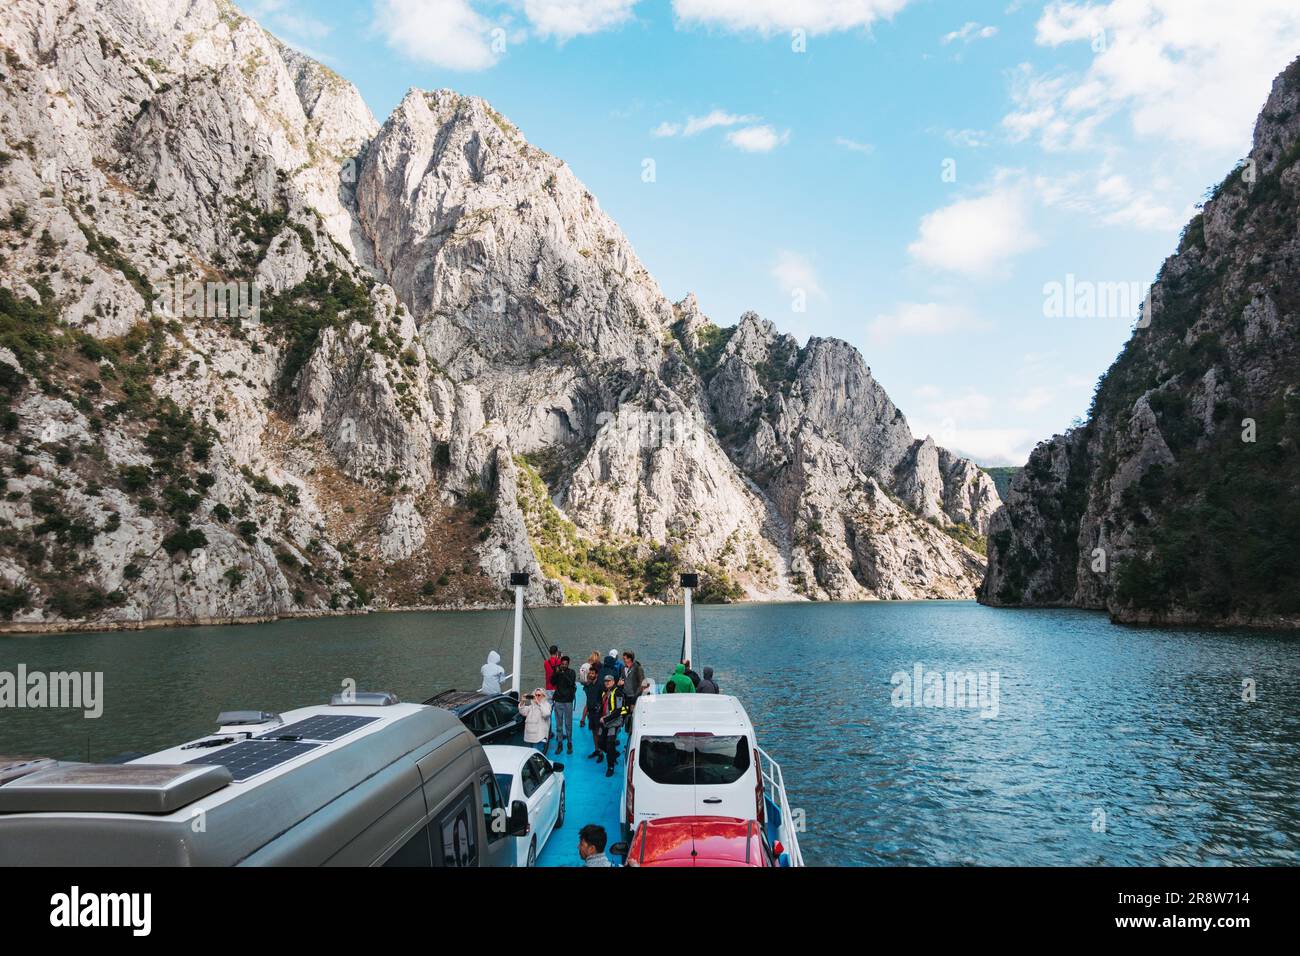 the Komani Lake Ferry navigates a rocky gorge with a payload of people and vehicles, on Lake Koman, Albania Stock Photo